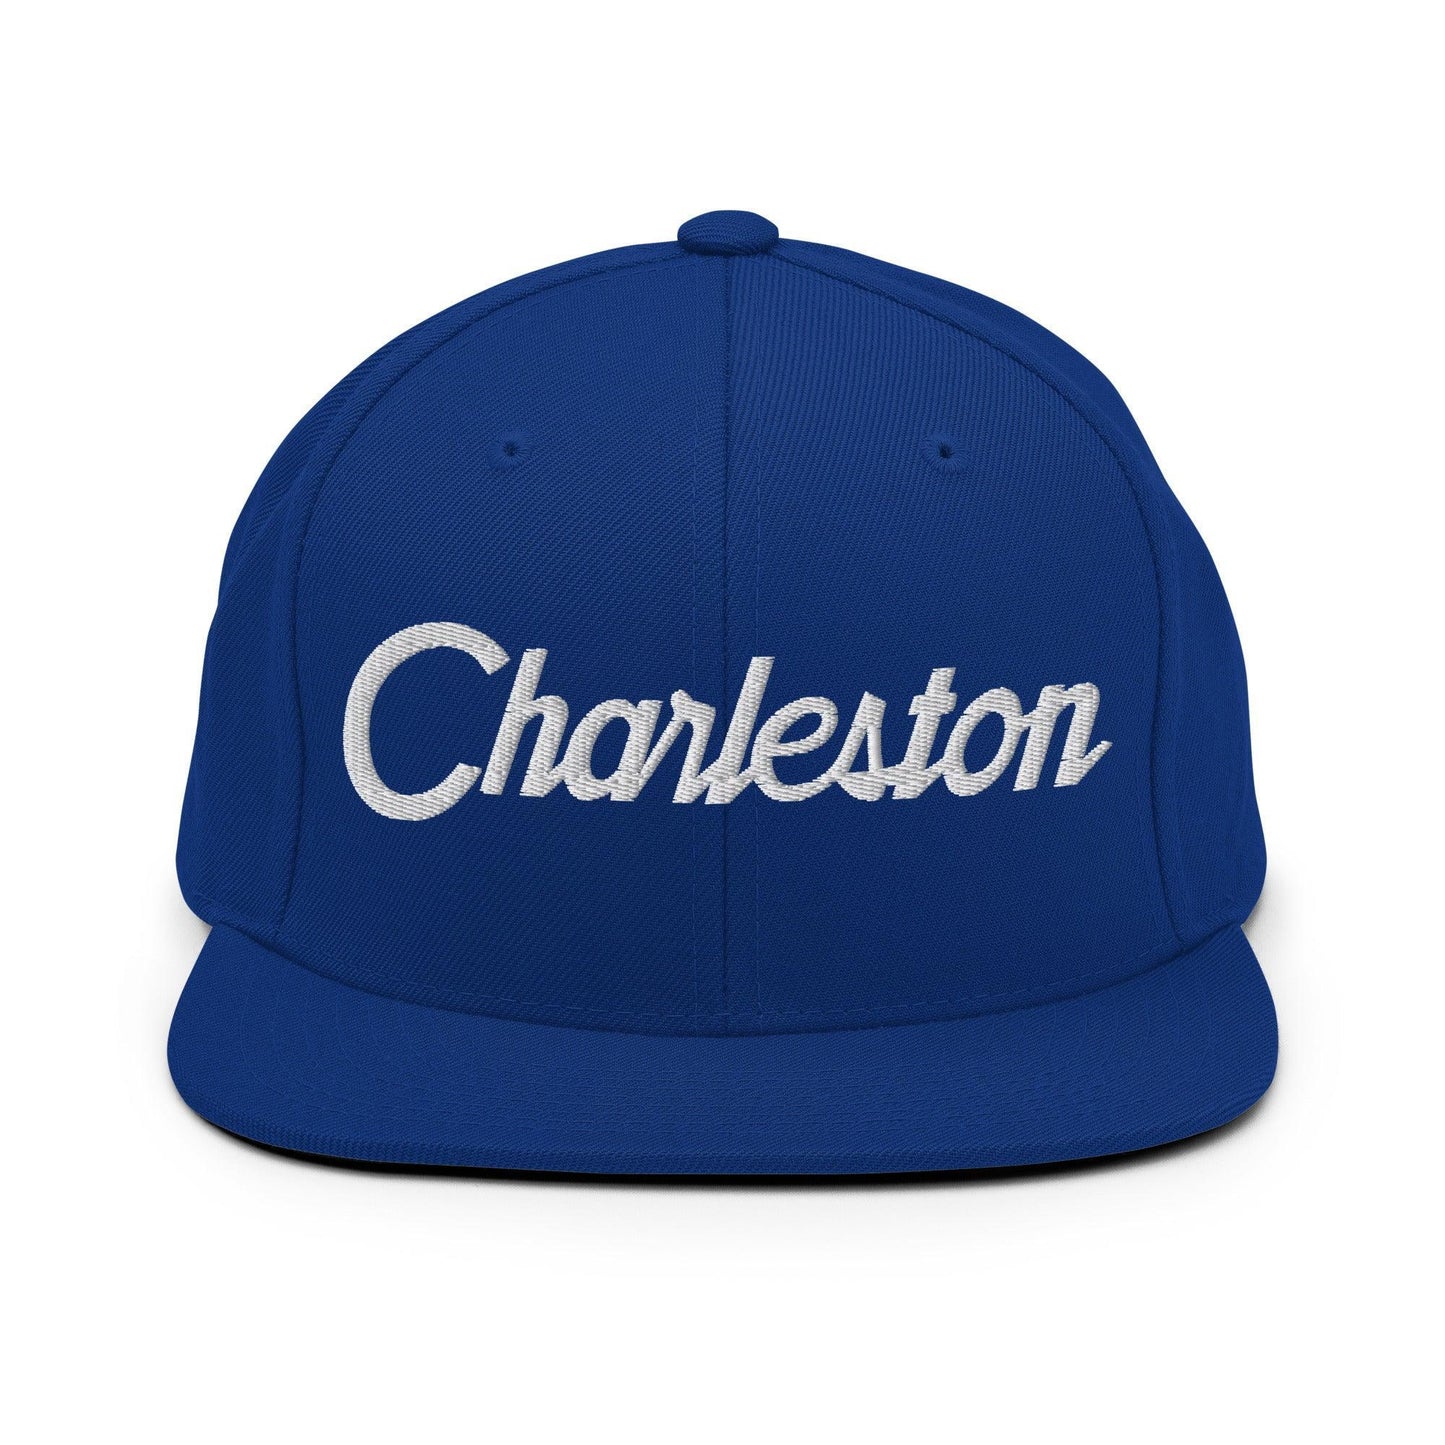 Charleston Script Snapback Hat Royal Blue